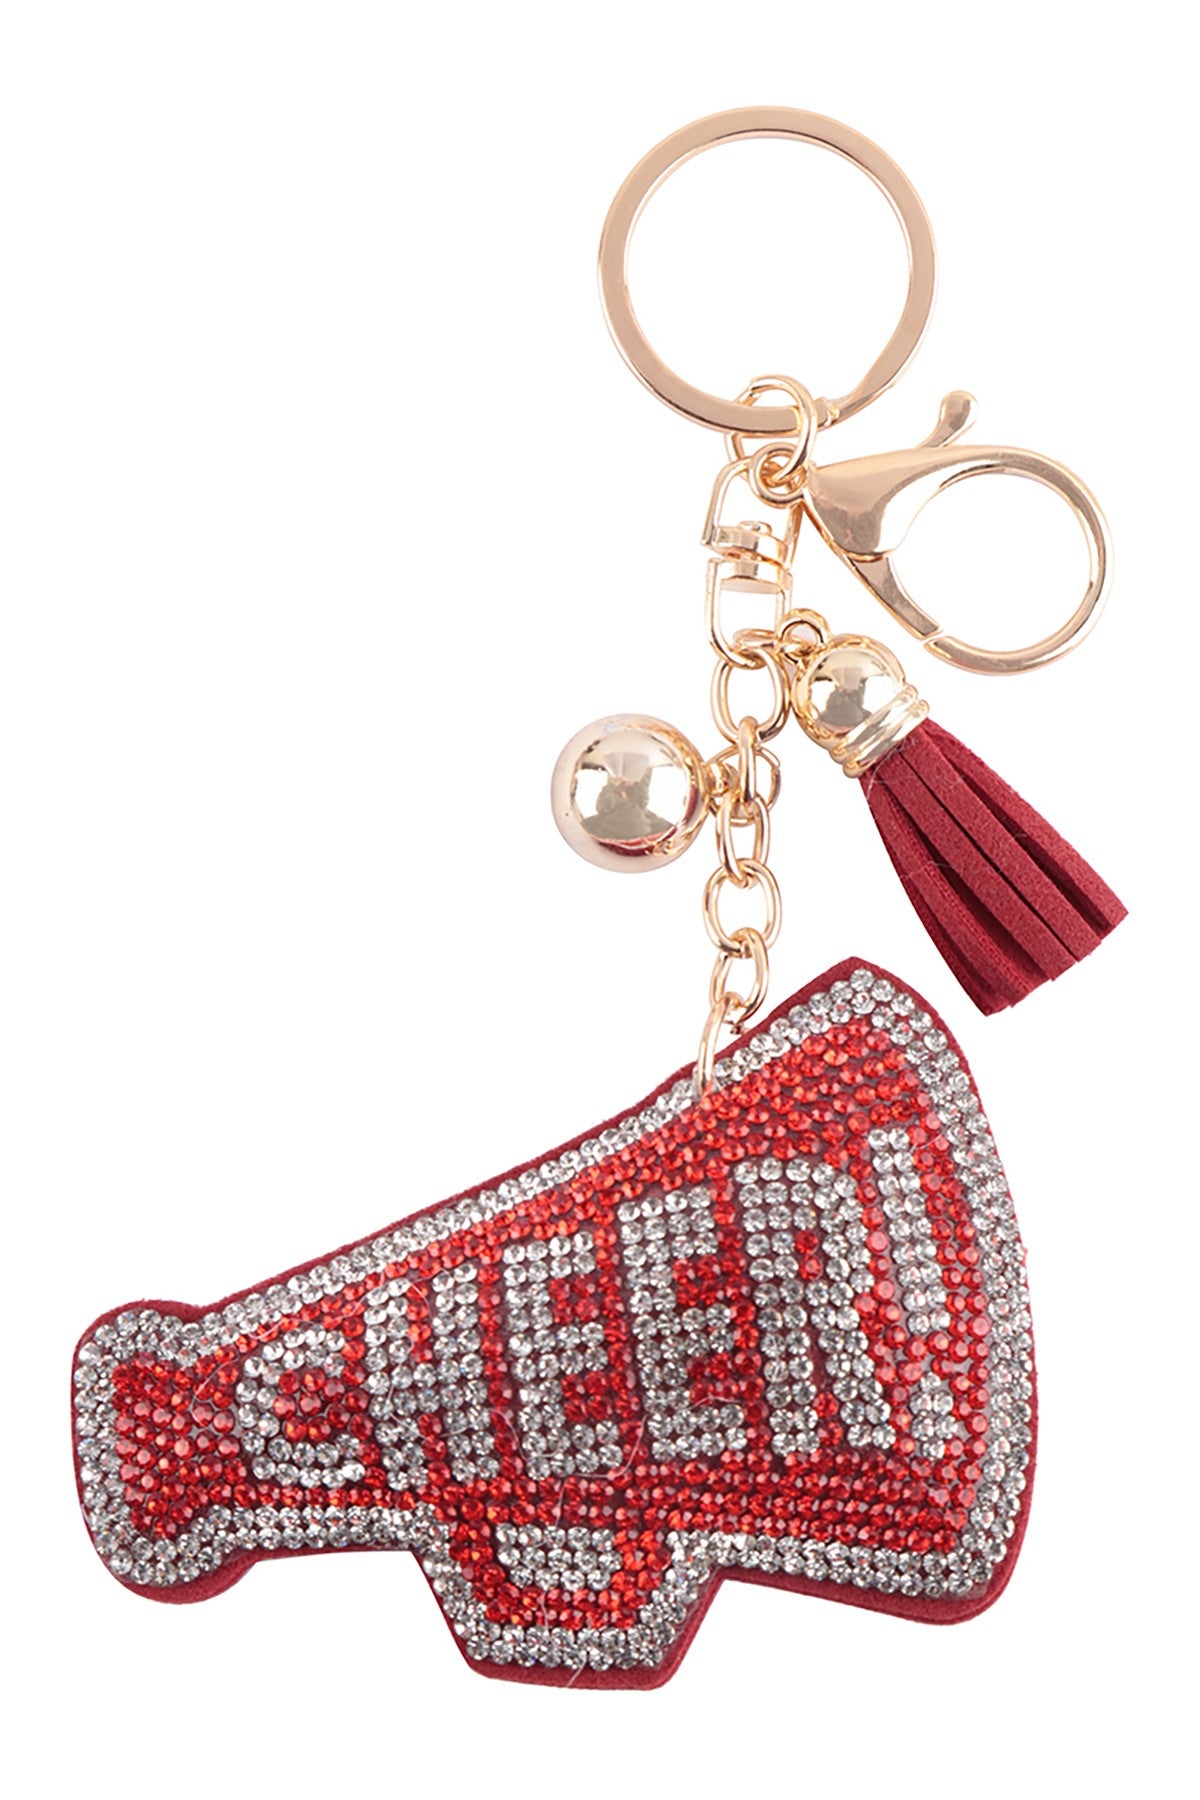 Red Cheer Megaphone Crystal Puffy Keychain Purse Charm